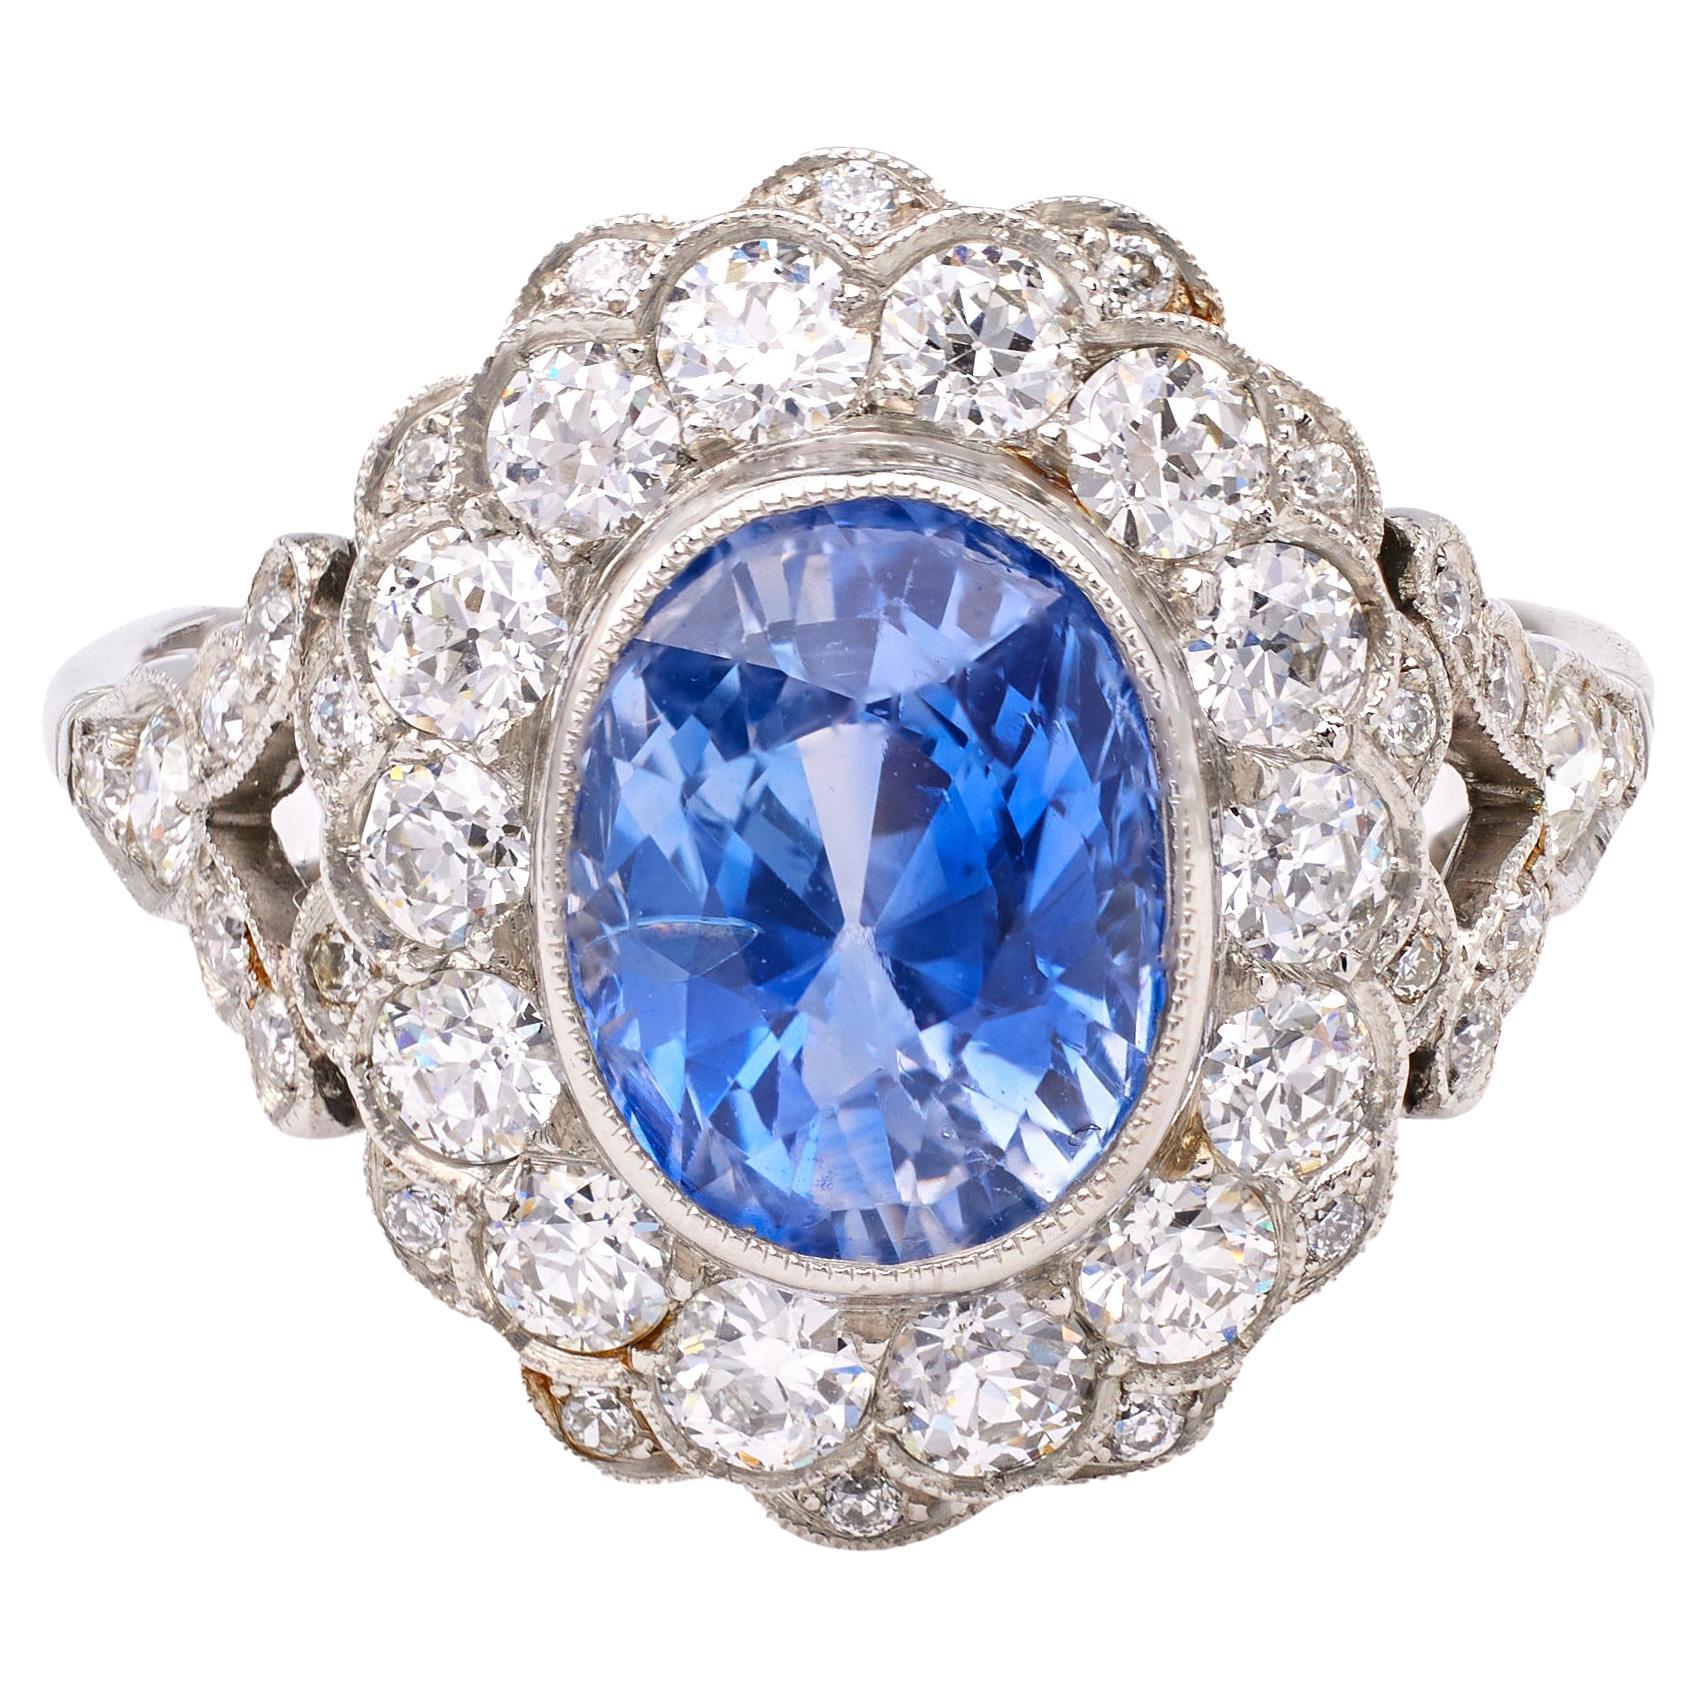 Art Deco Inspired 3.94 Carat Sapphire and Diamond Platinum Cluster Ring